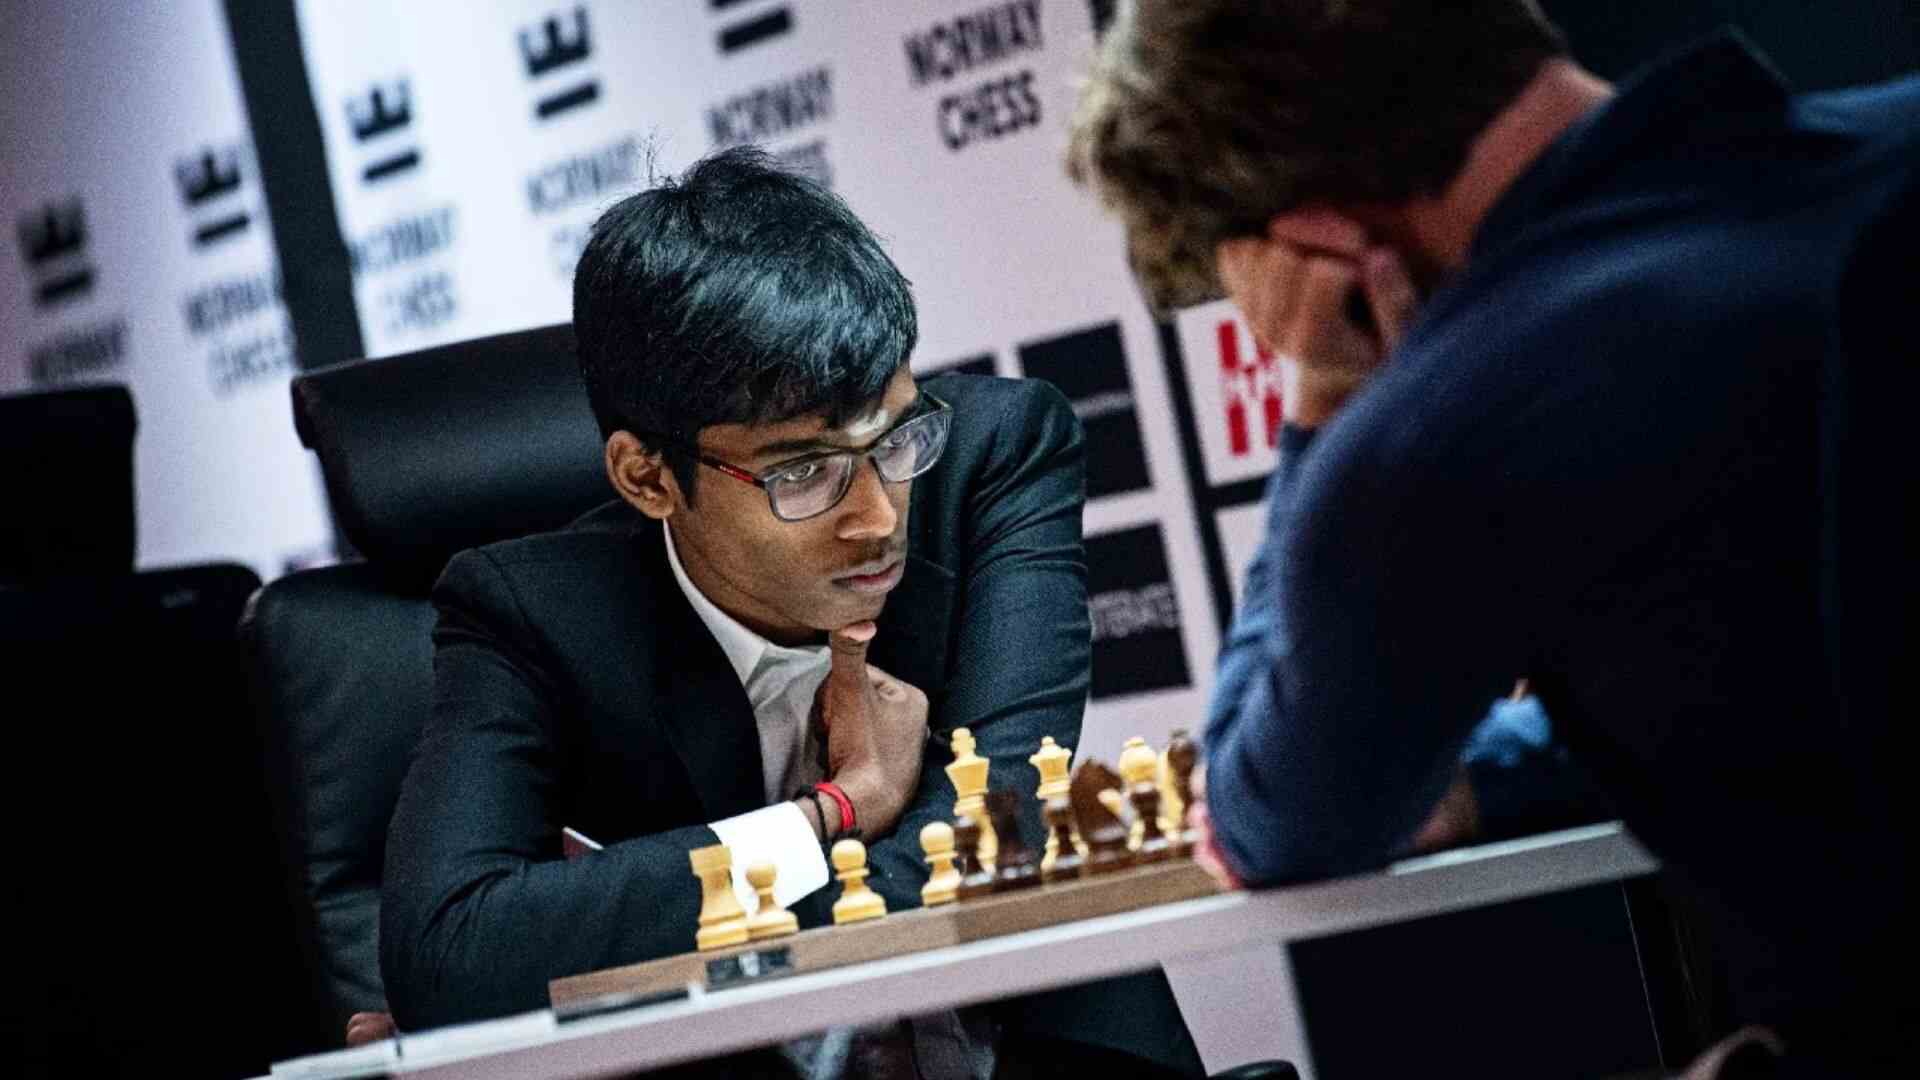 “You’re On A Roll”: Gautam Adani lauds Chess Grandmaster Rameshbabu Praggnanandhaa